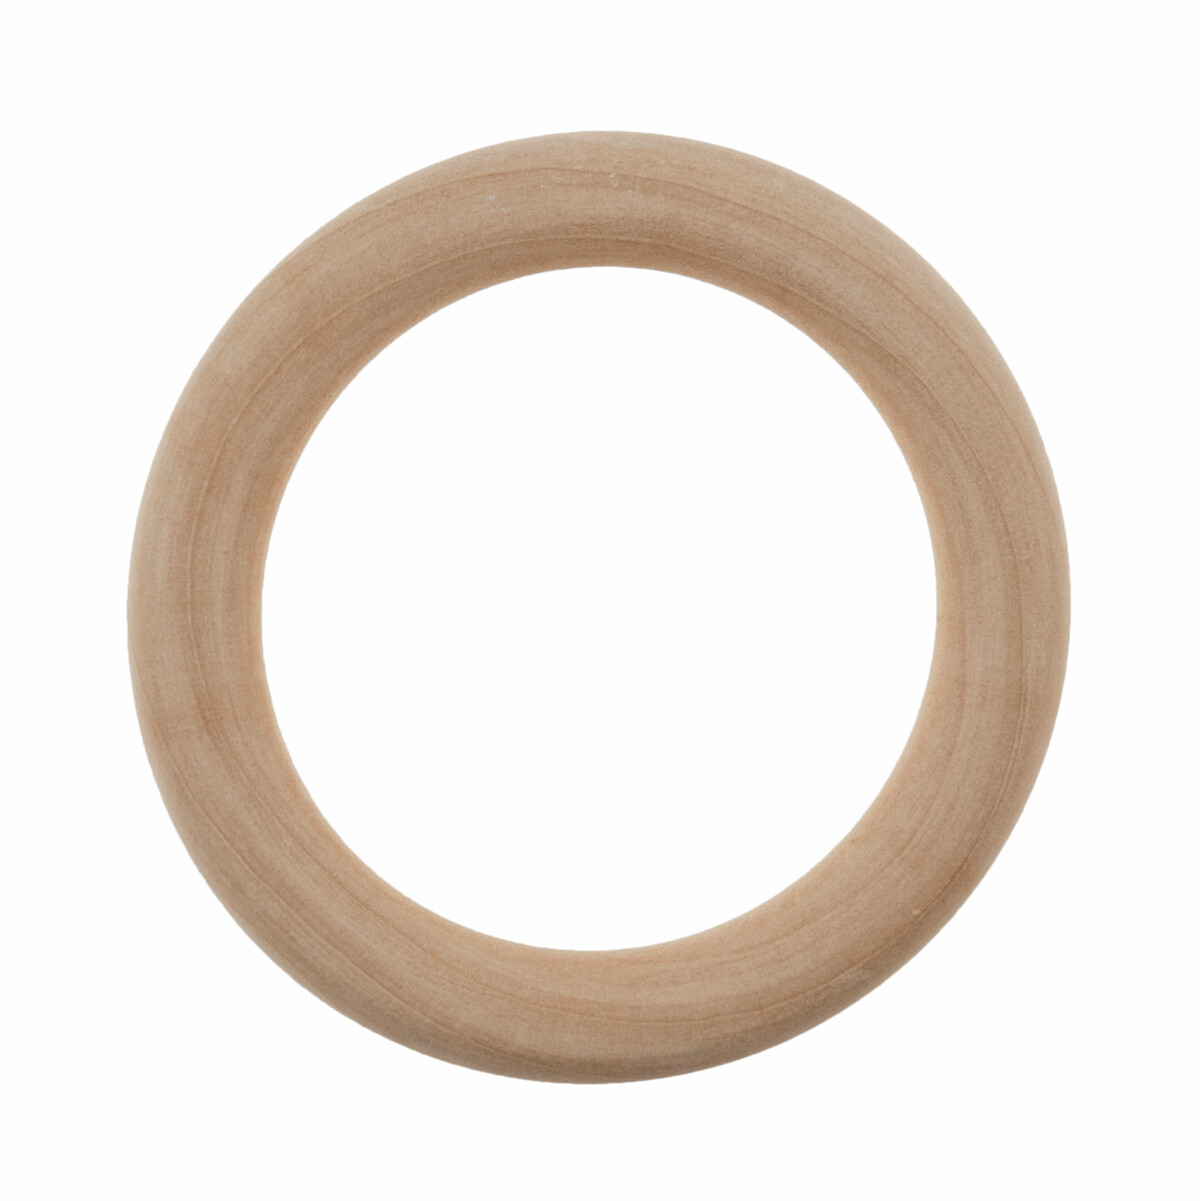 Birch Wood Craft Ring: 5.5cm diameter.